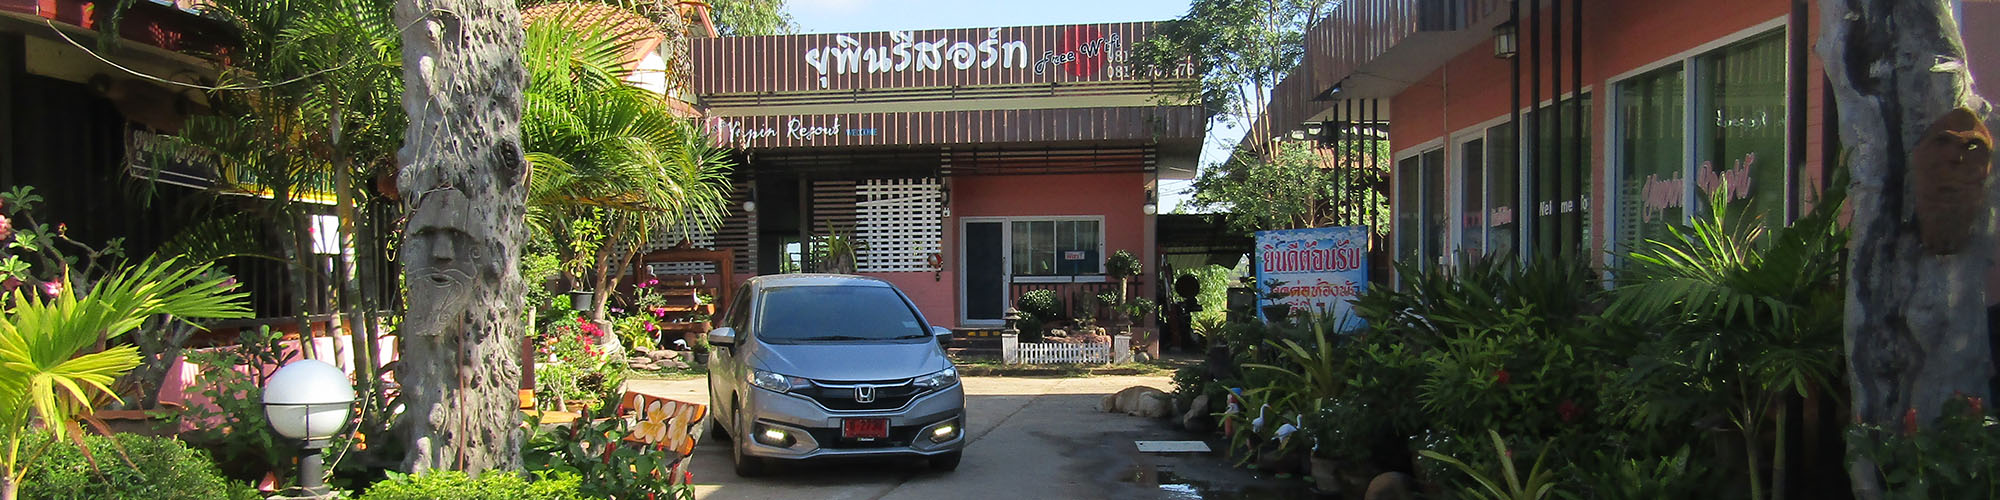 Yupin Resort, Phanom Dong Rak District, Surin Province